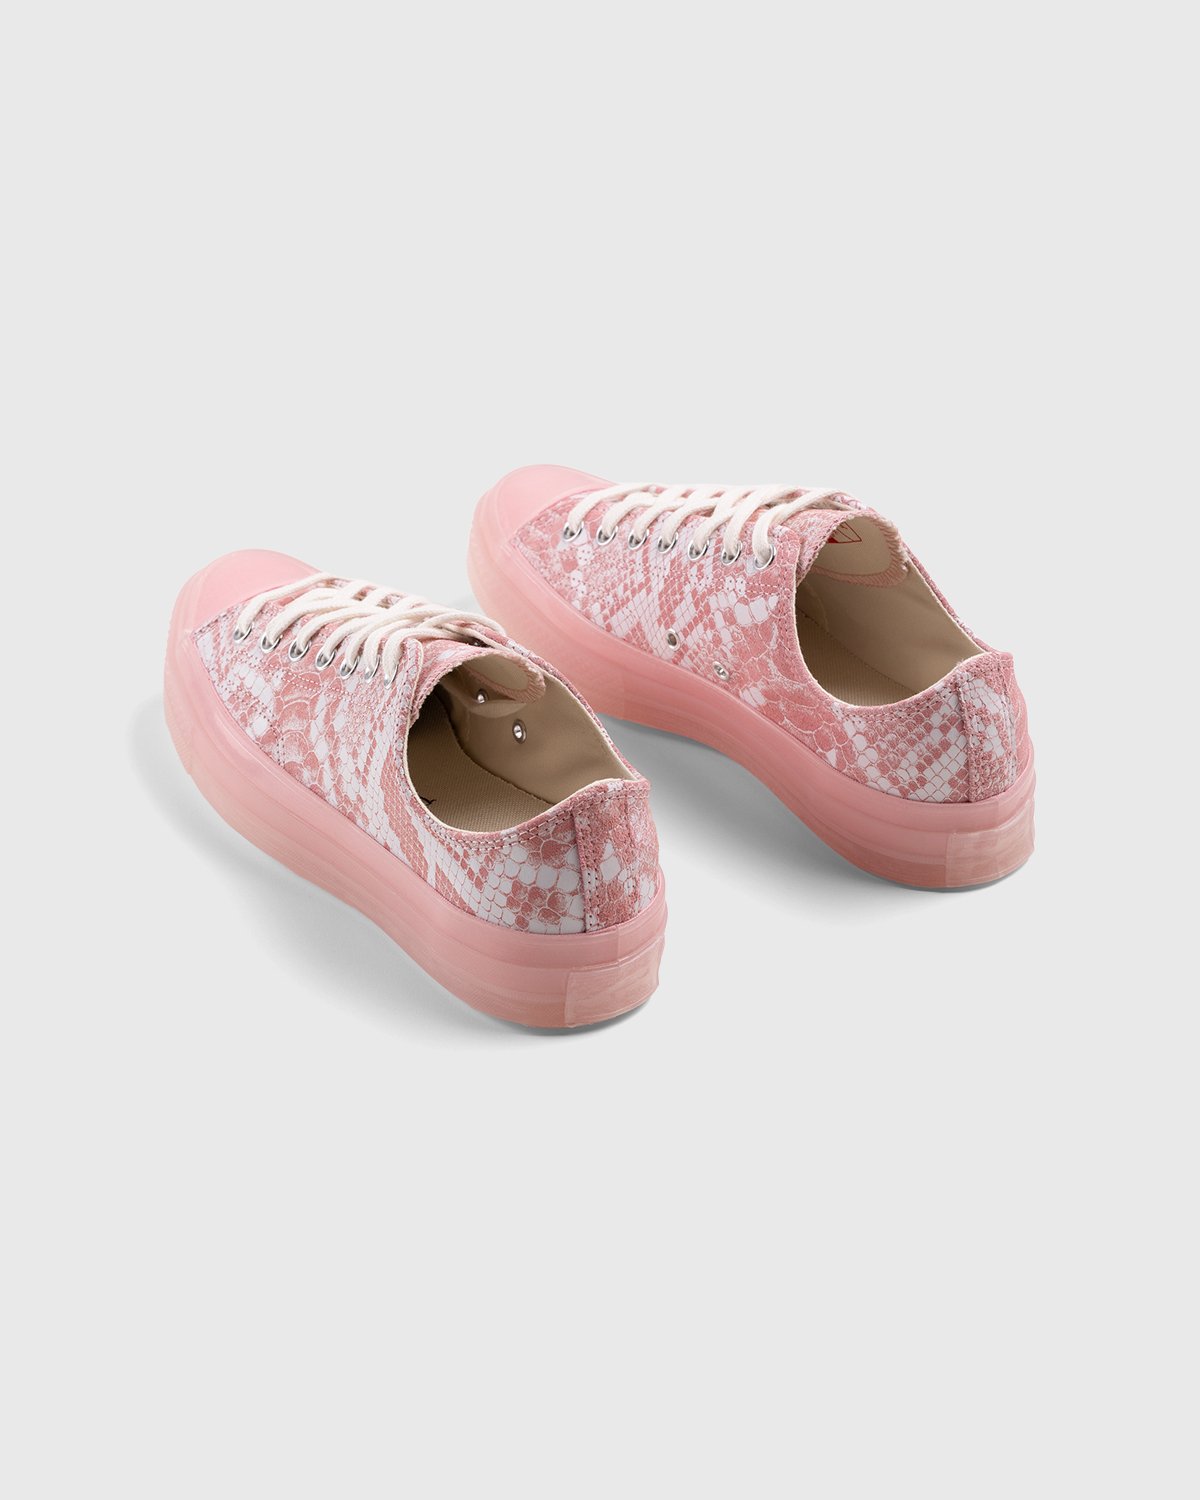 Converse x GOLF WANG - Chuck 70 Ox Python Pink Dogwood Vintage White - Footwear - Pink - Image 4